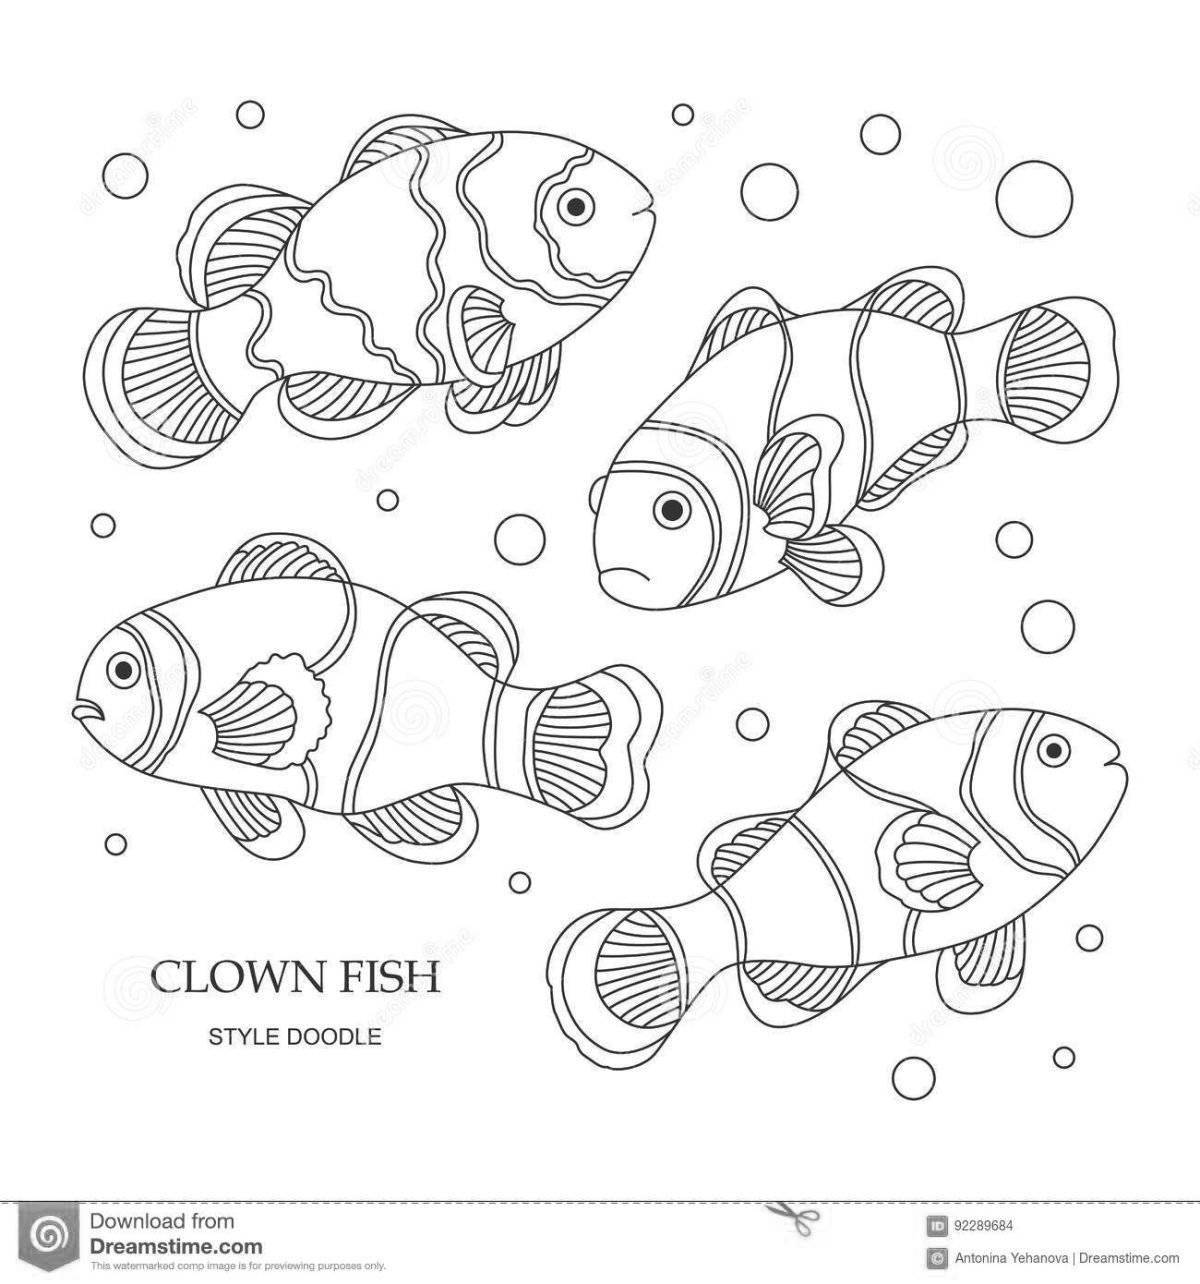 A striking drawing of a clownfish